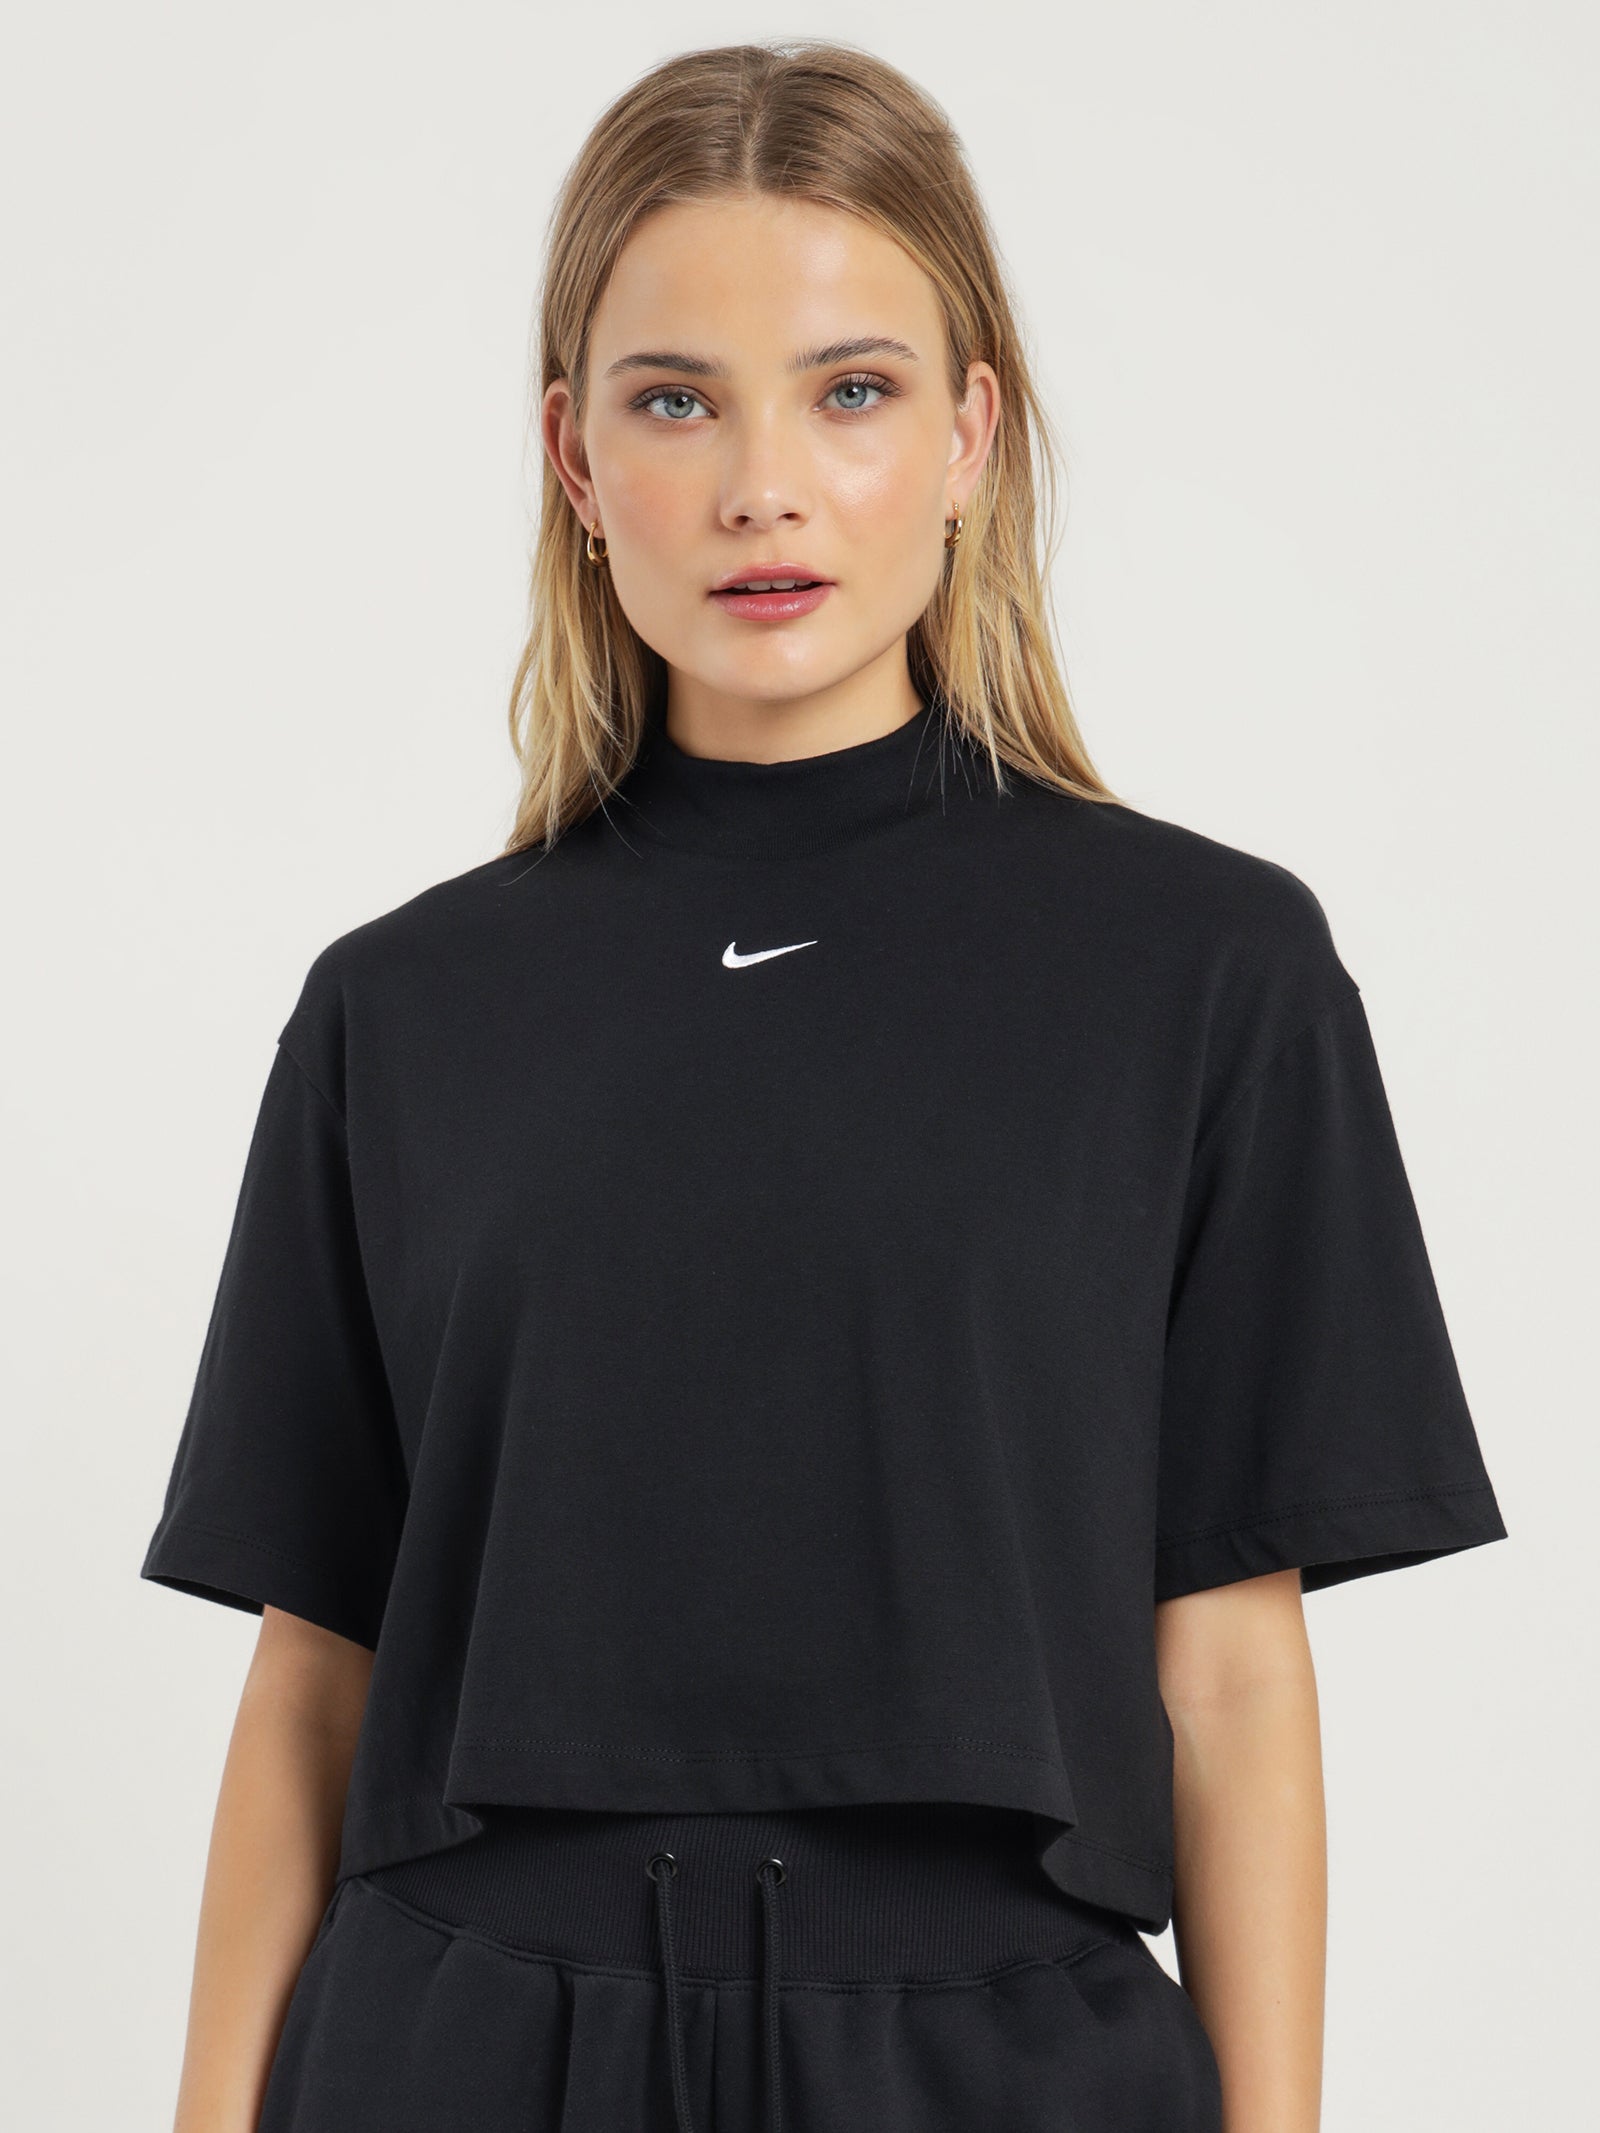 Sportswear Essential Boxy Mock-Neck Short Sleeve Top in Black & White -  Glue Store